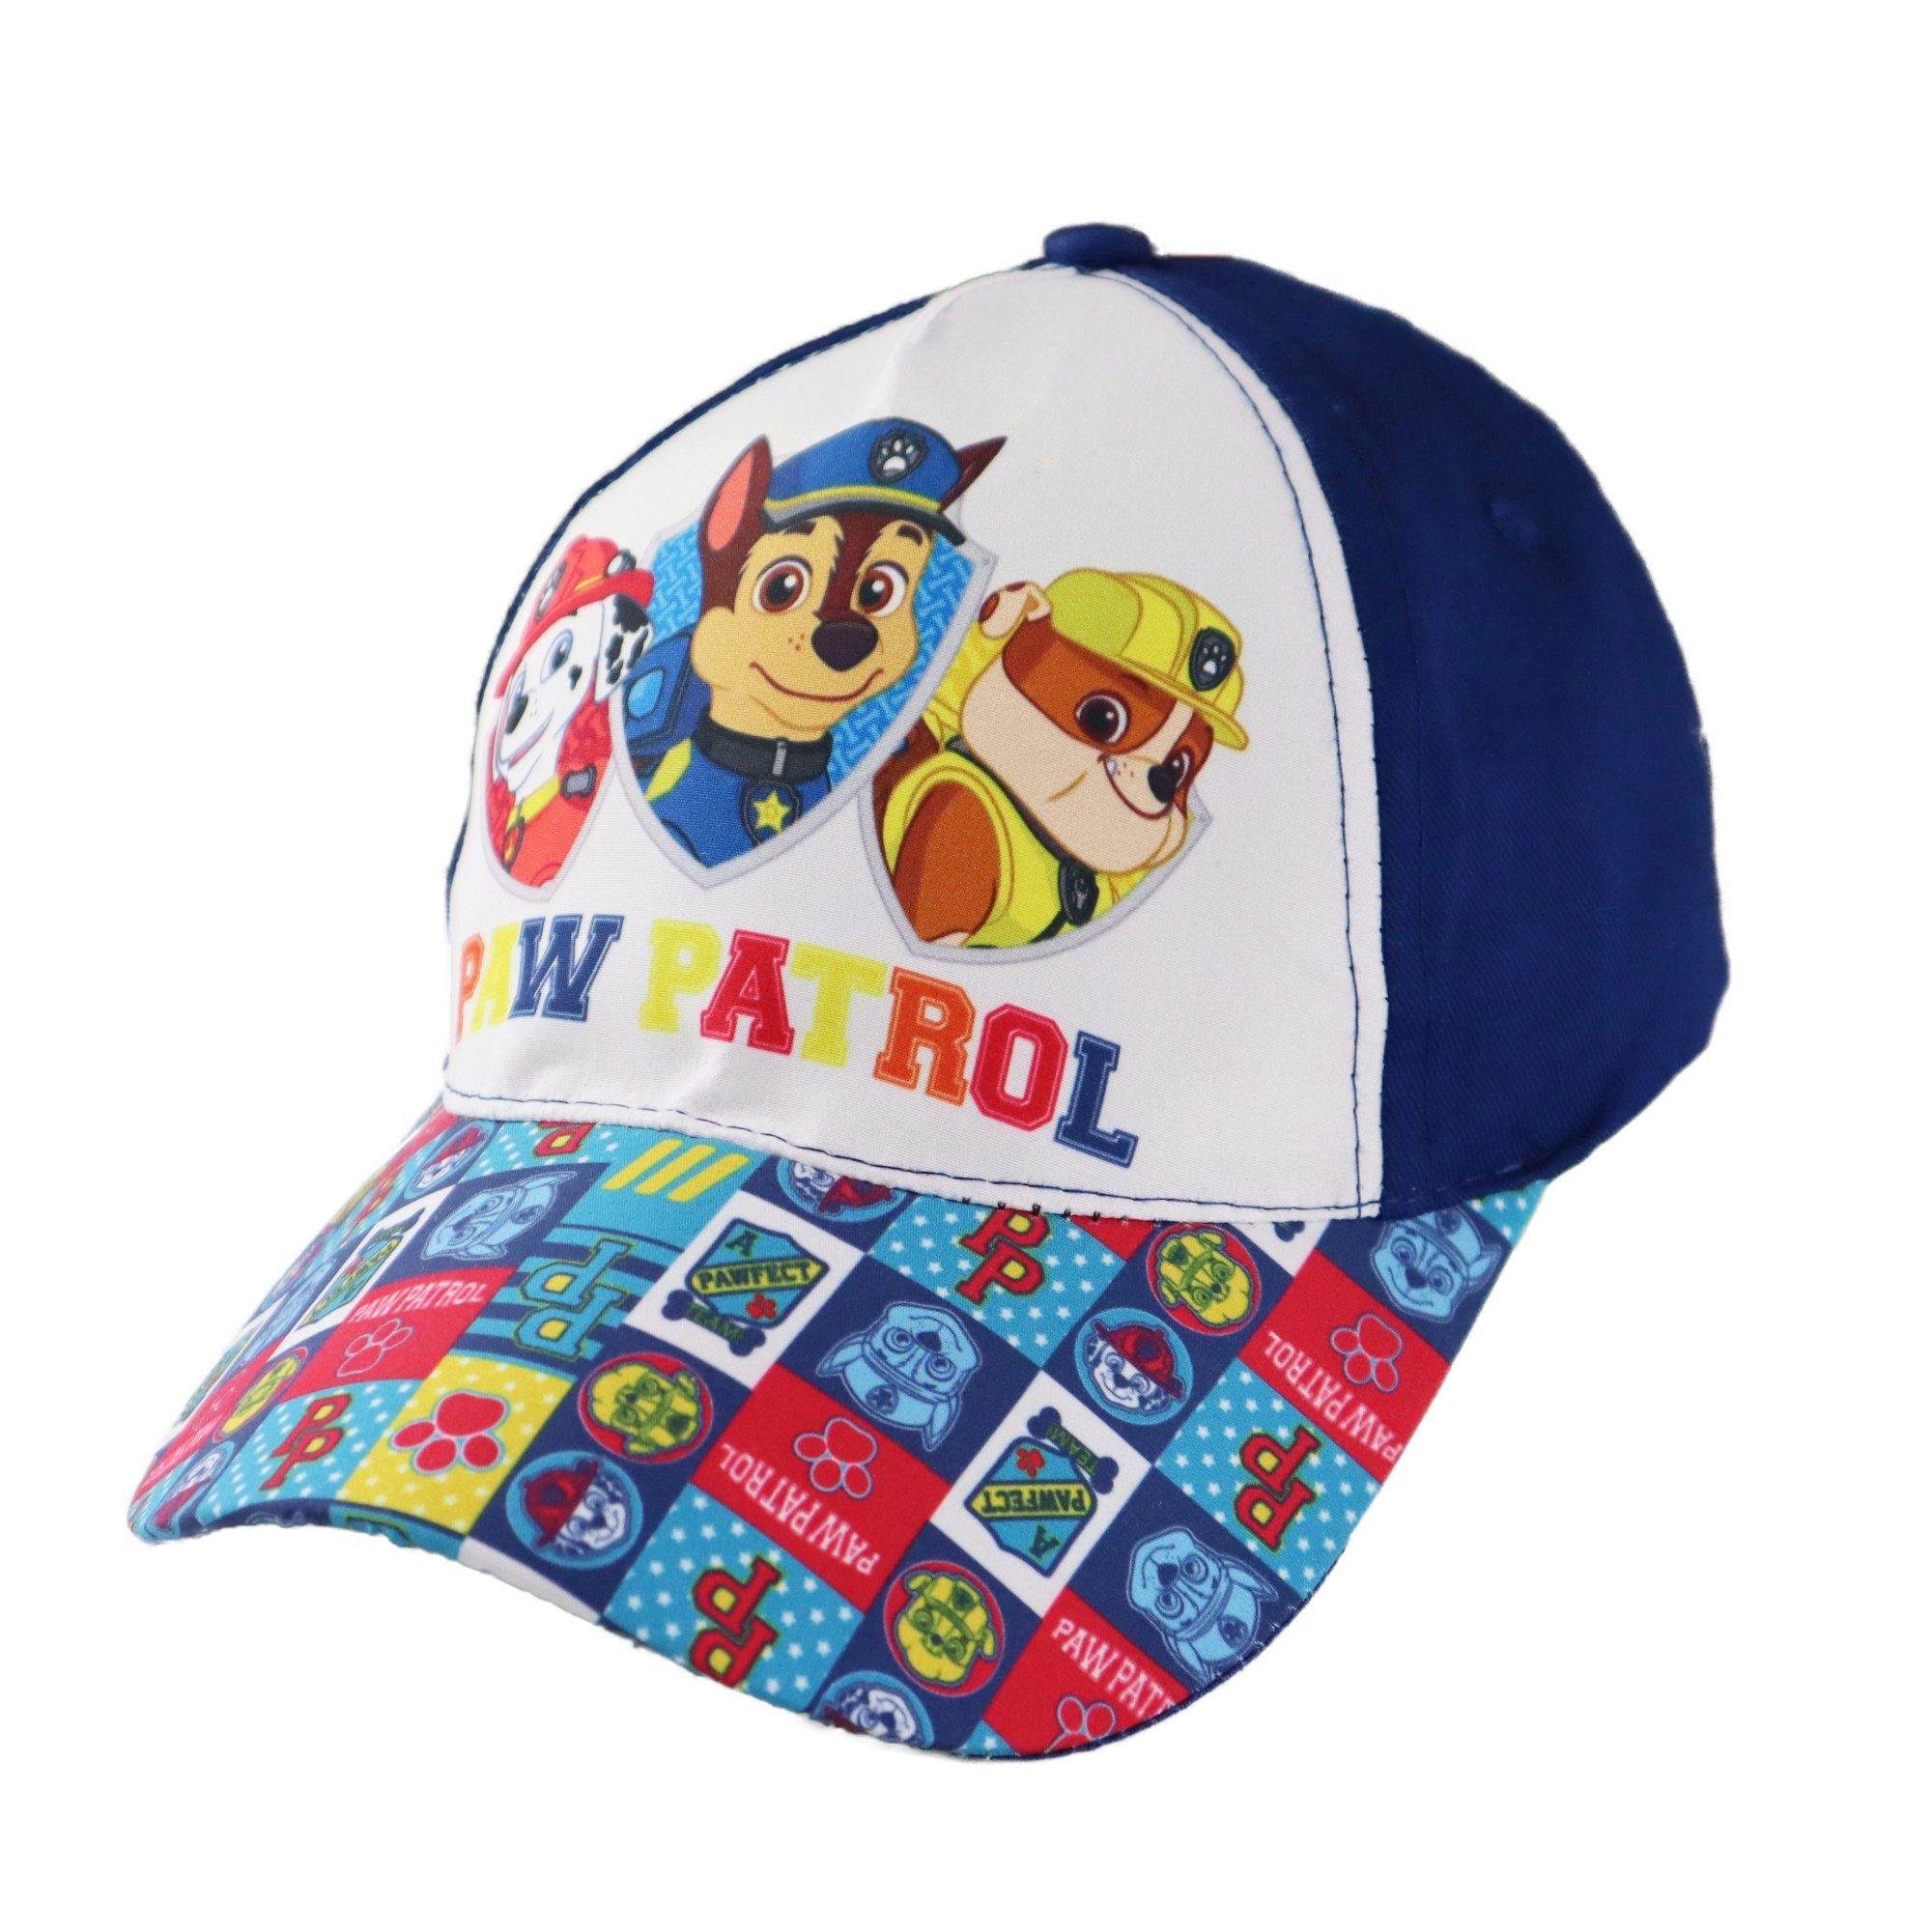 Disney Paw Patrol Cap Basecap Kappe Mütze Kopfbedeckung Größe 52-54 NEU 